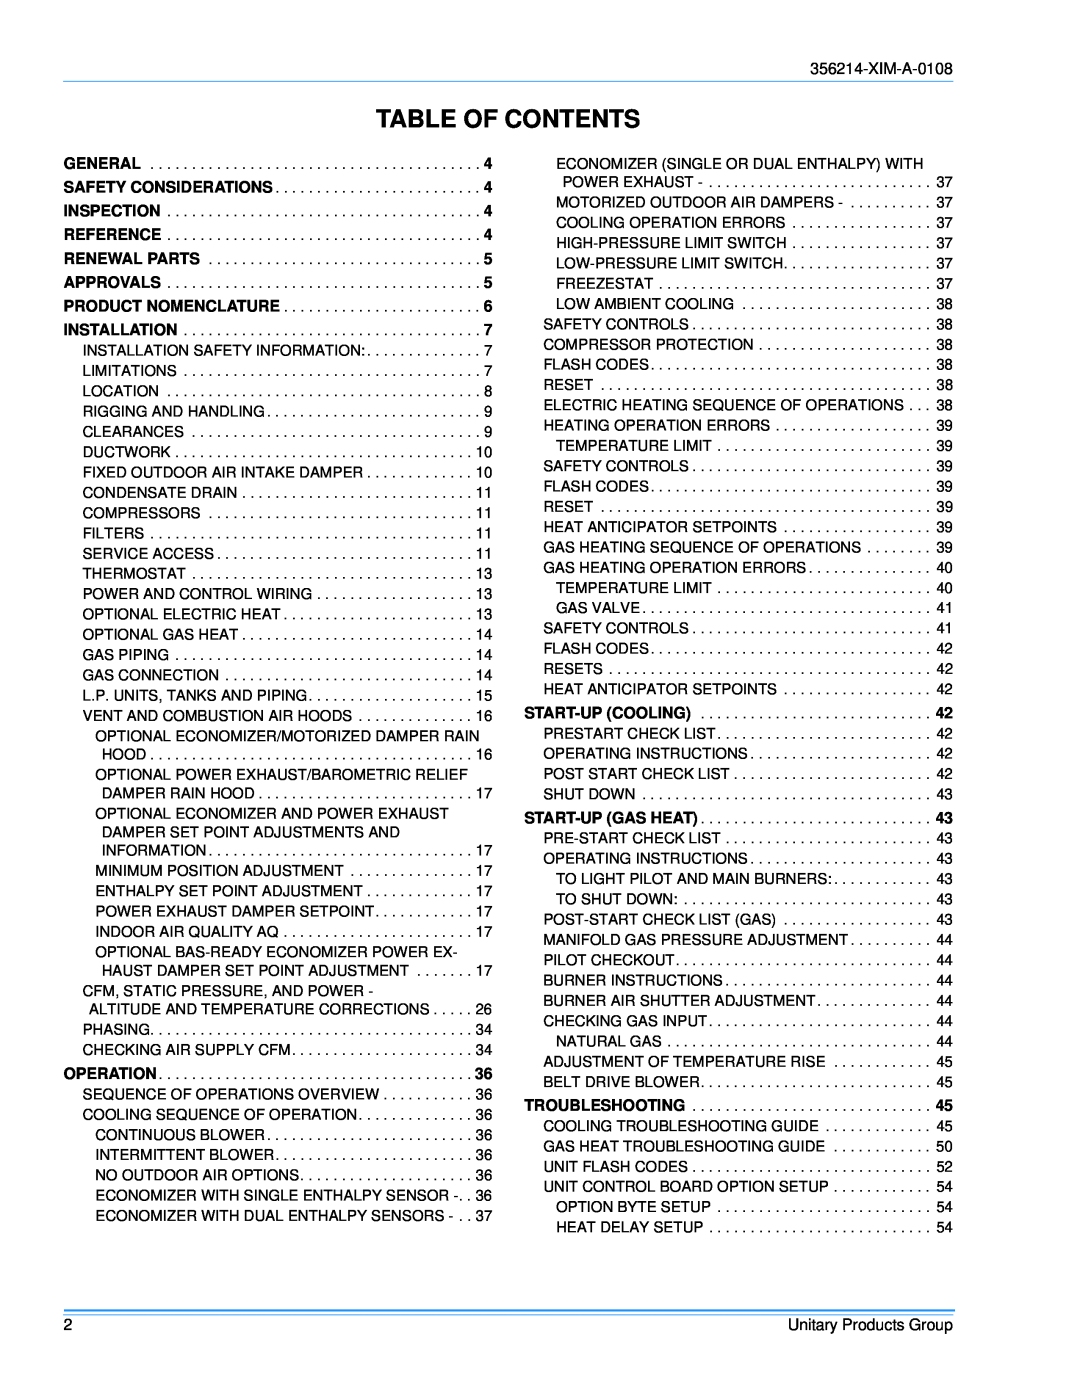 Sunlife Enterprises DM180, DM300, DM240 installation manual Table Of Contents, XIM-A-0108 